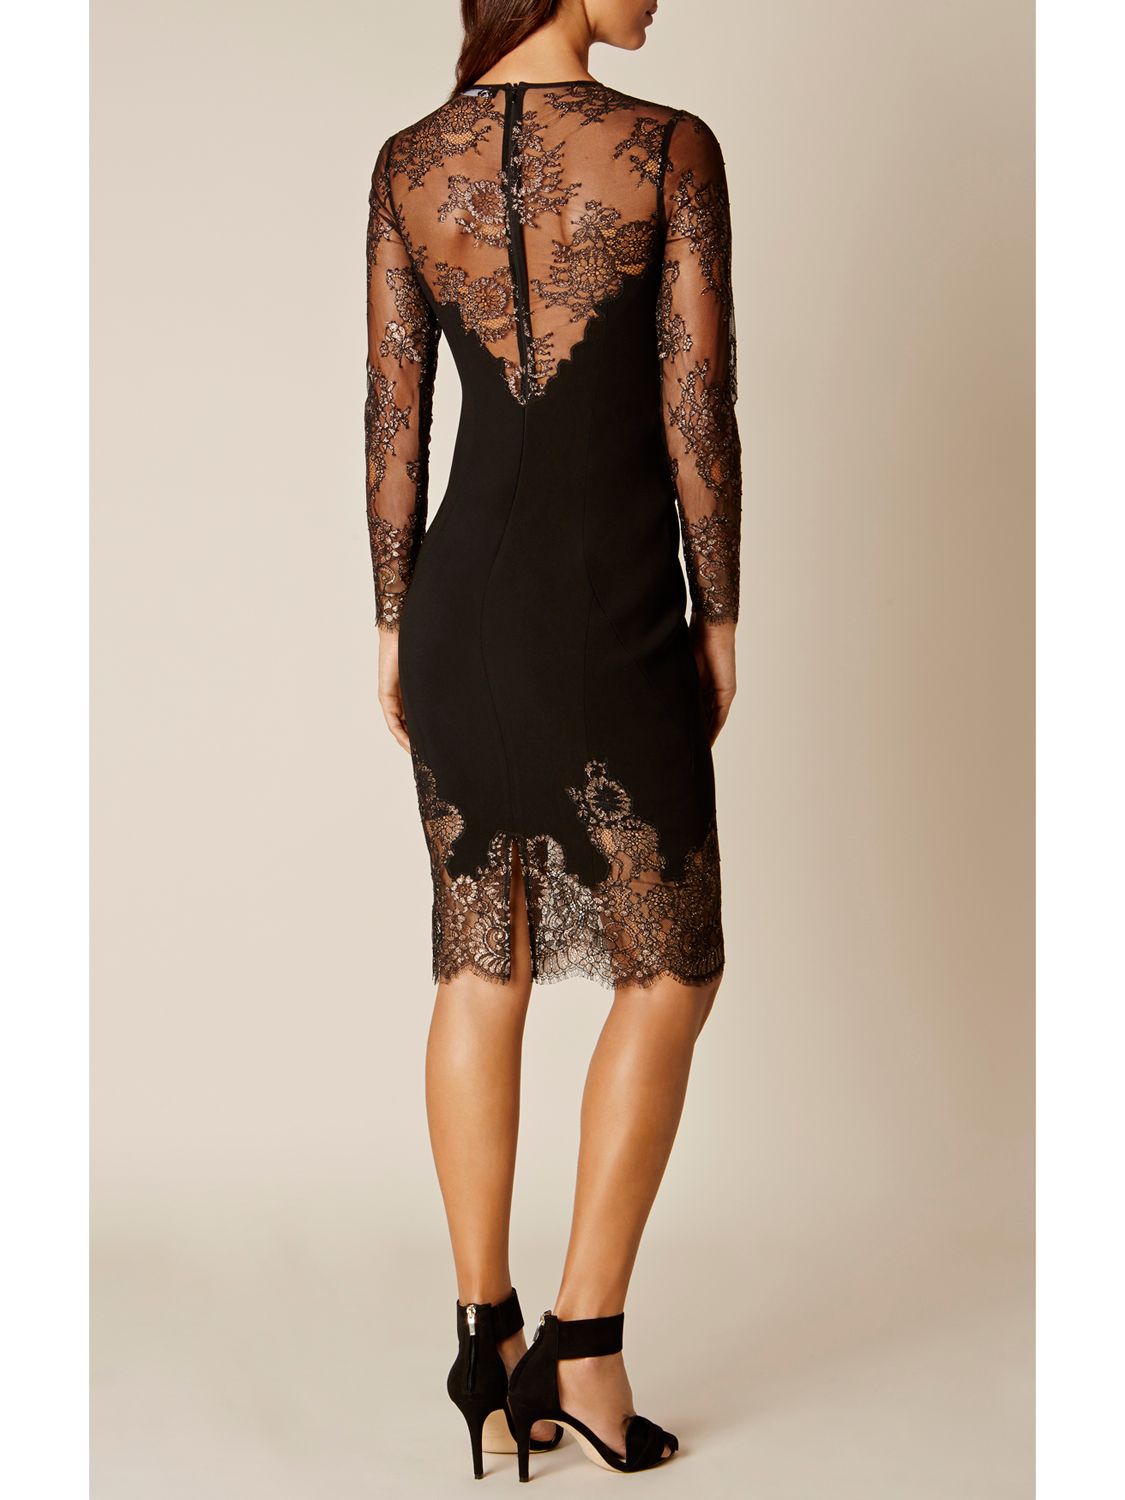 Karen Millen Metallic Lace Dress, Black/Multi